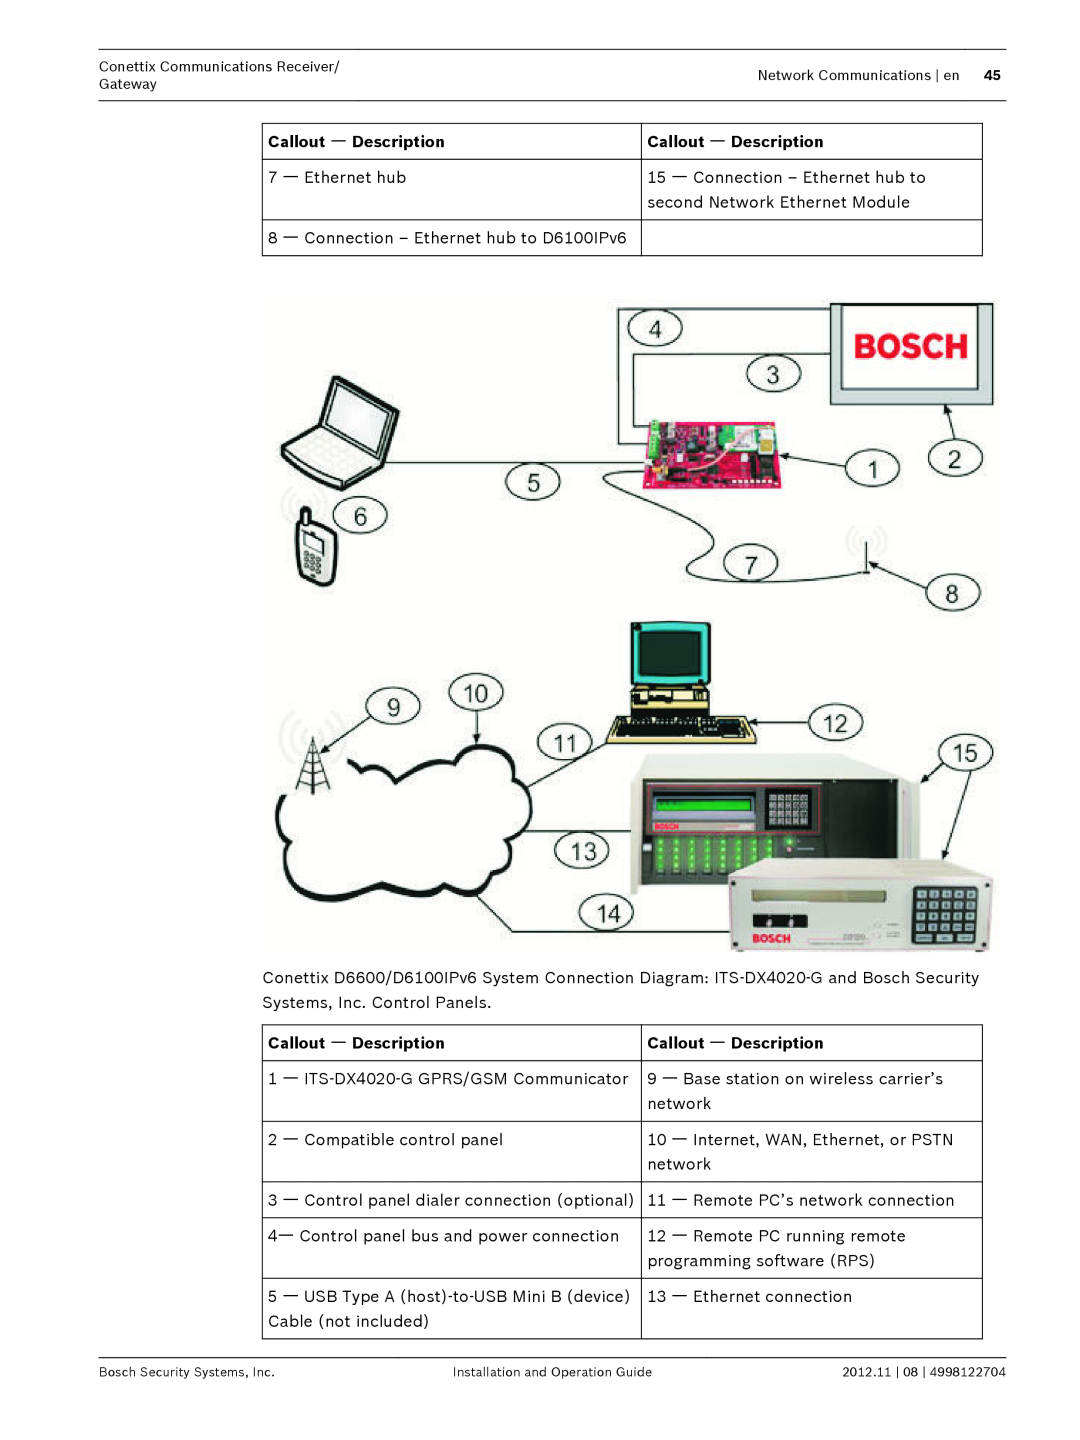 Bosch Appliances D6600 installation and operation guide Callout ᅳ Description, ᅳ Ethernet hub 